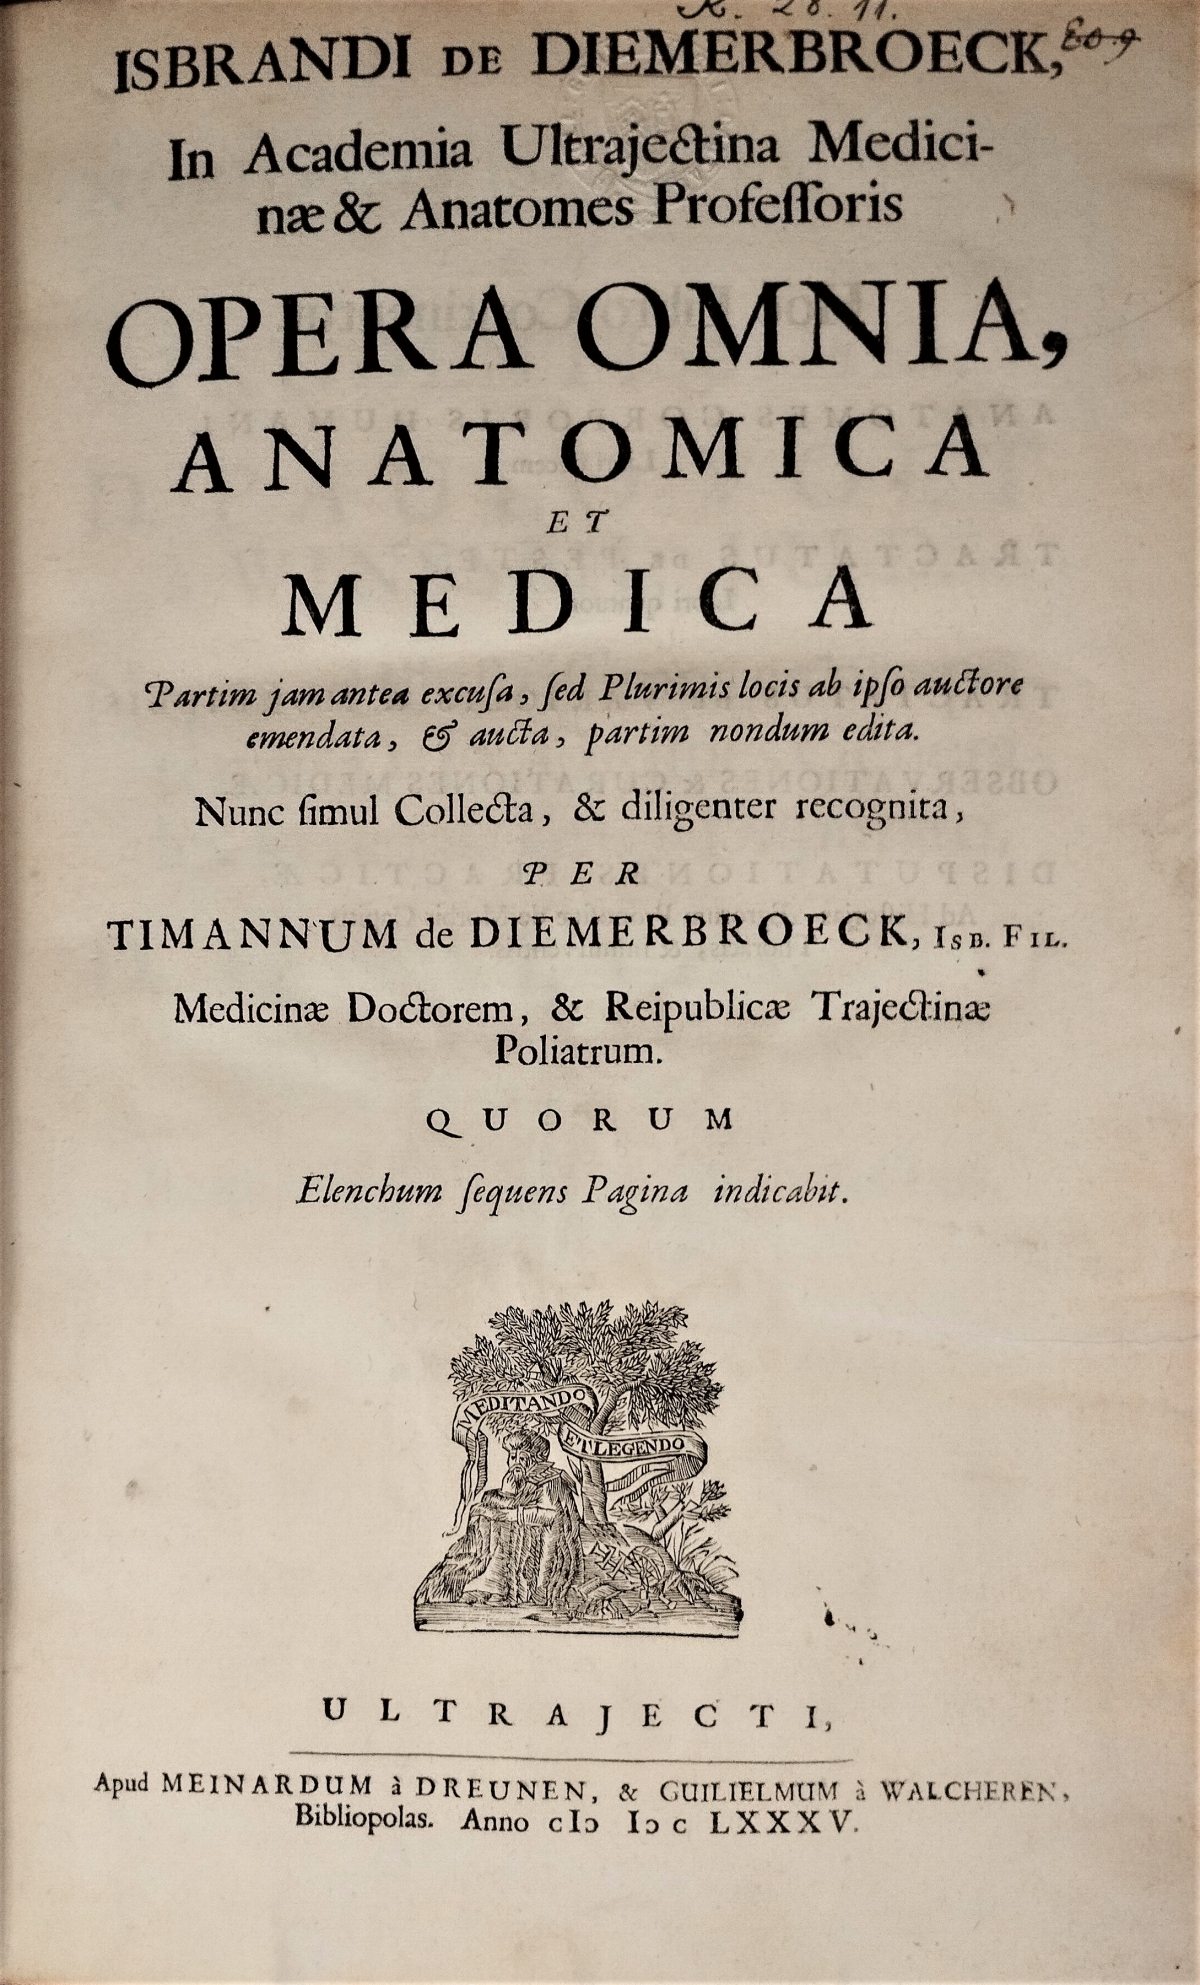 Title page of the book "Opera omnia anatomica et medica" by Ysbrand van Diemerbroeck. 